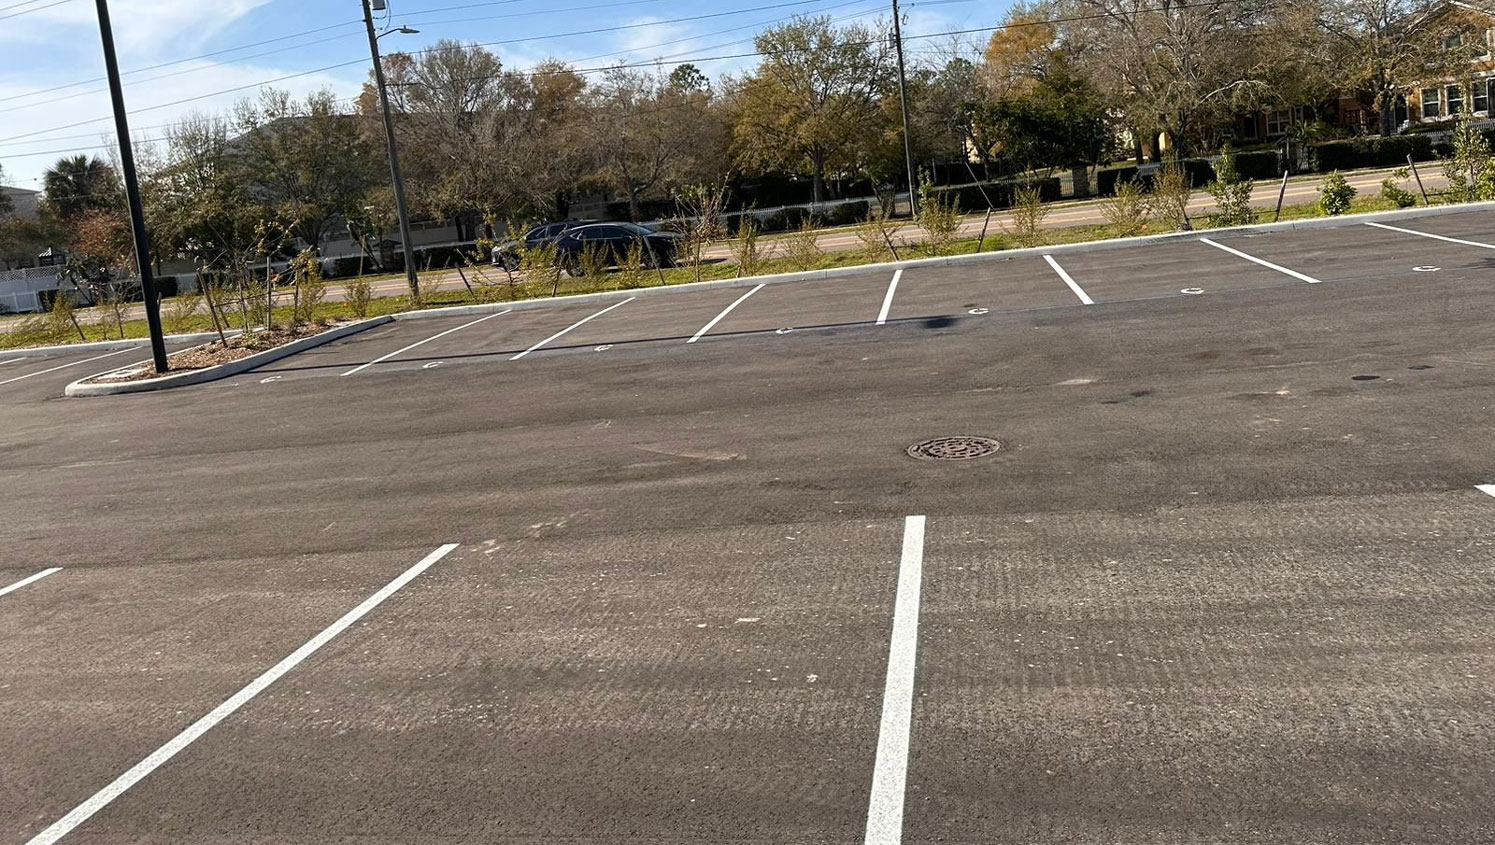 parking lot striping in Tampa, FL